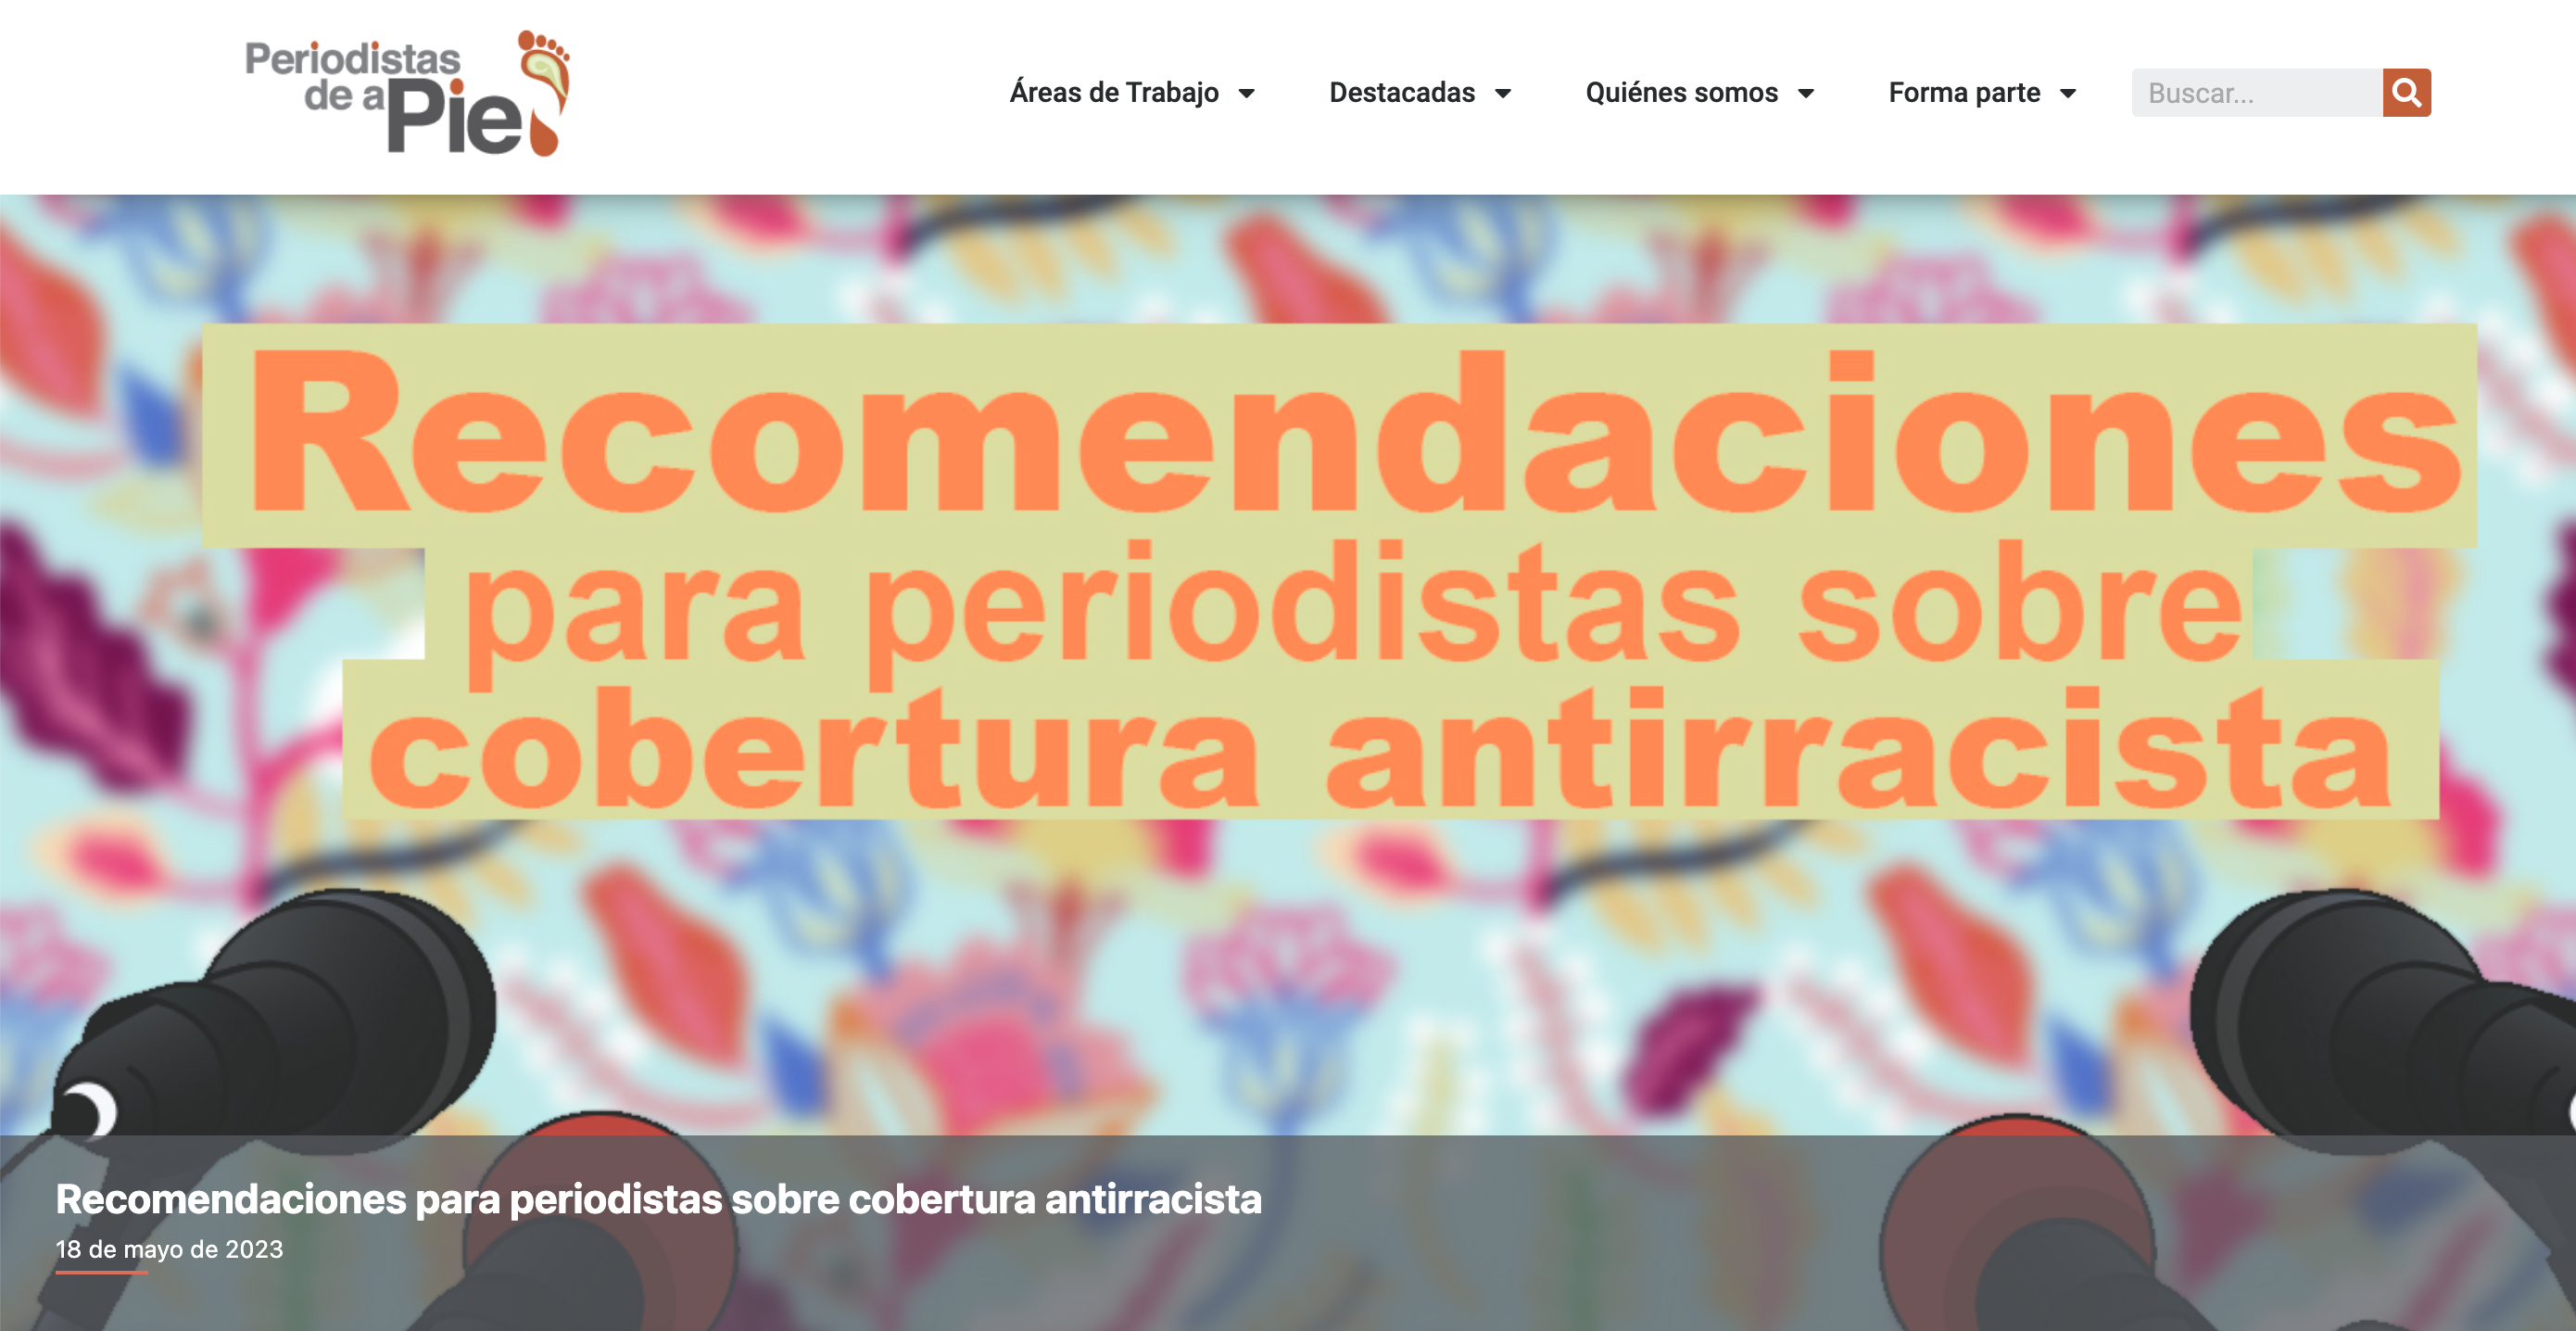 Screenshot of the Mexican journalism website Periodistas de a Pie website.